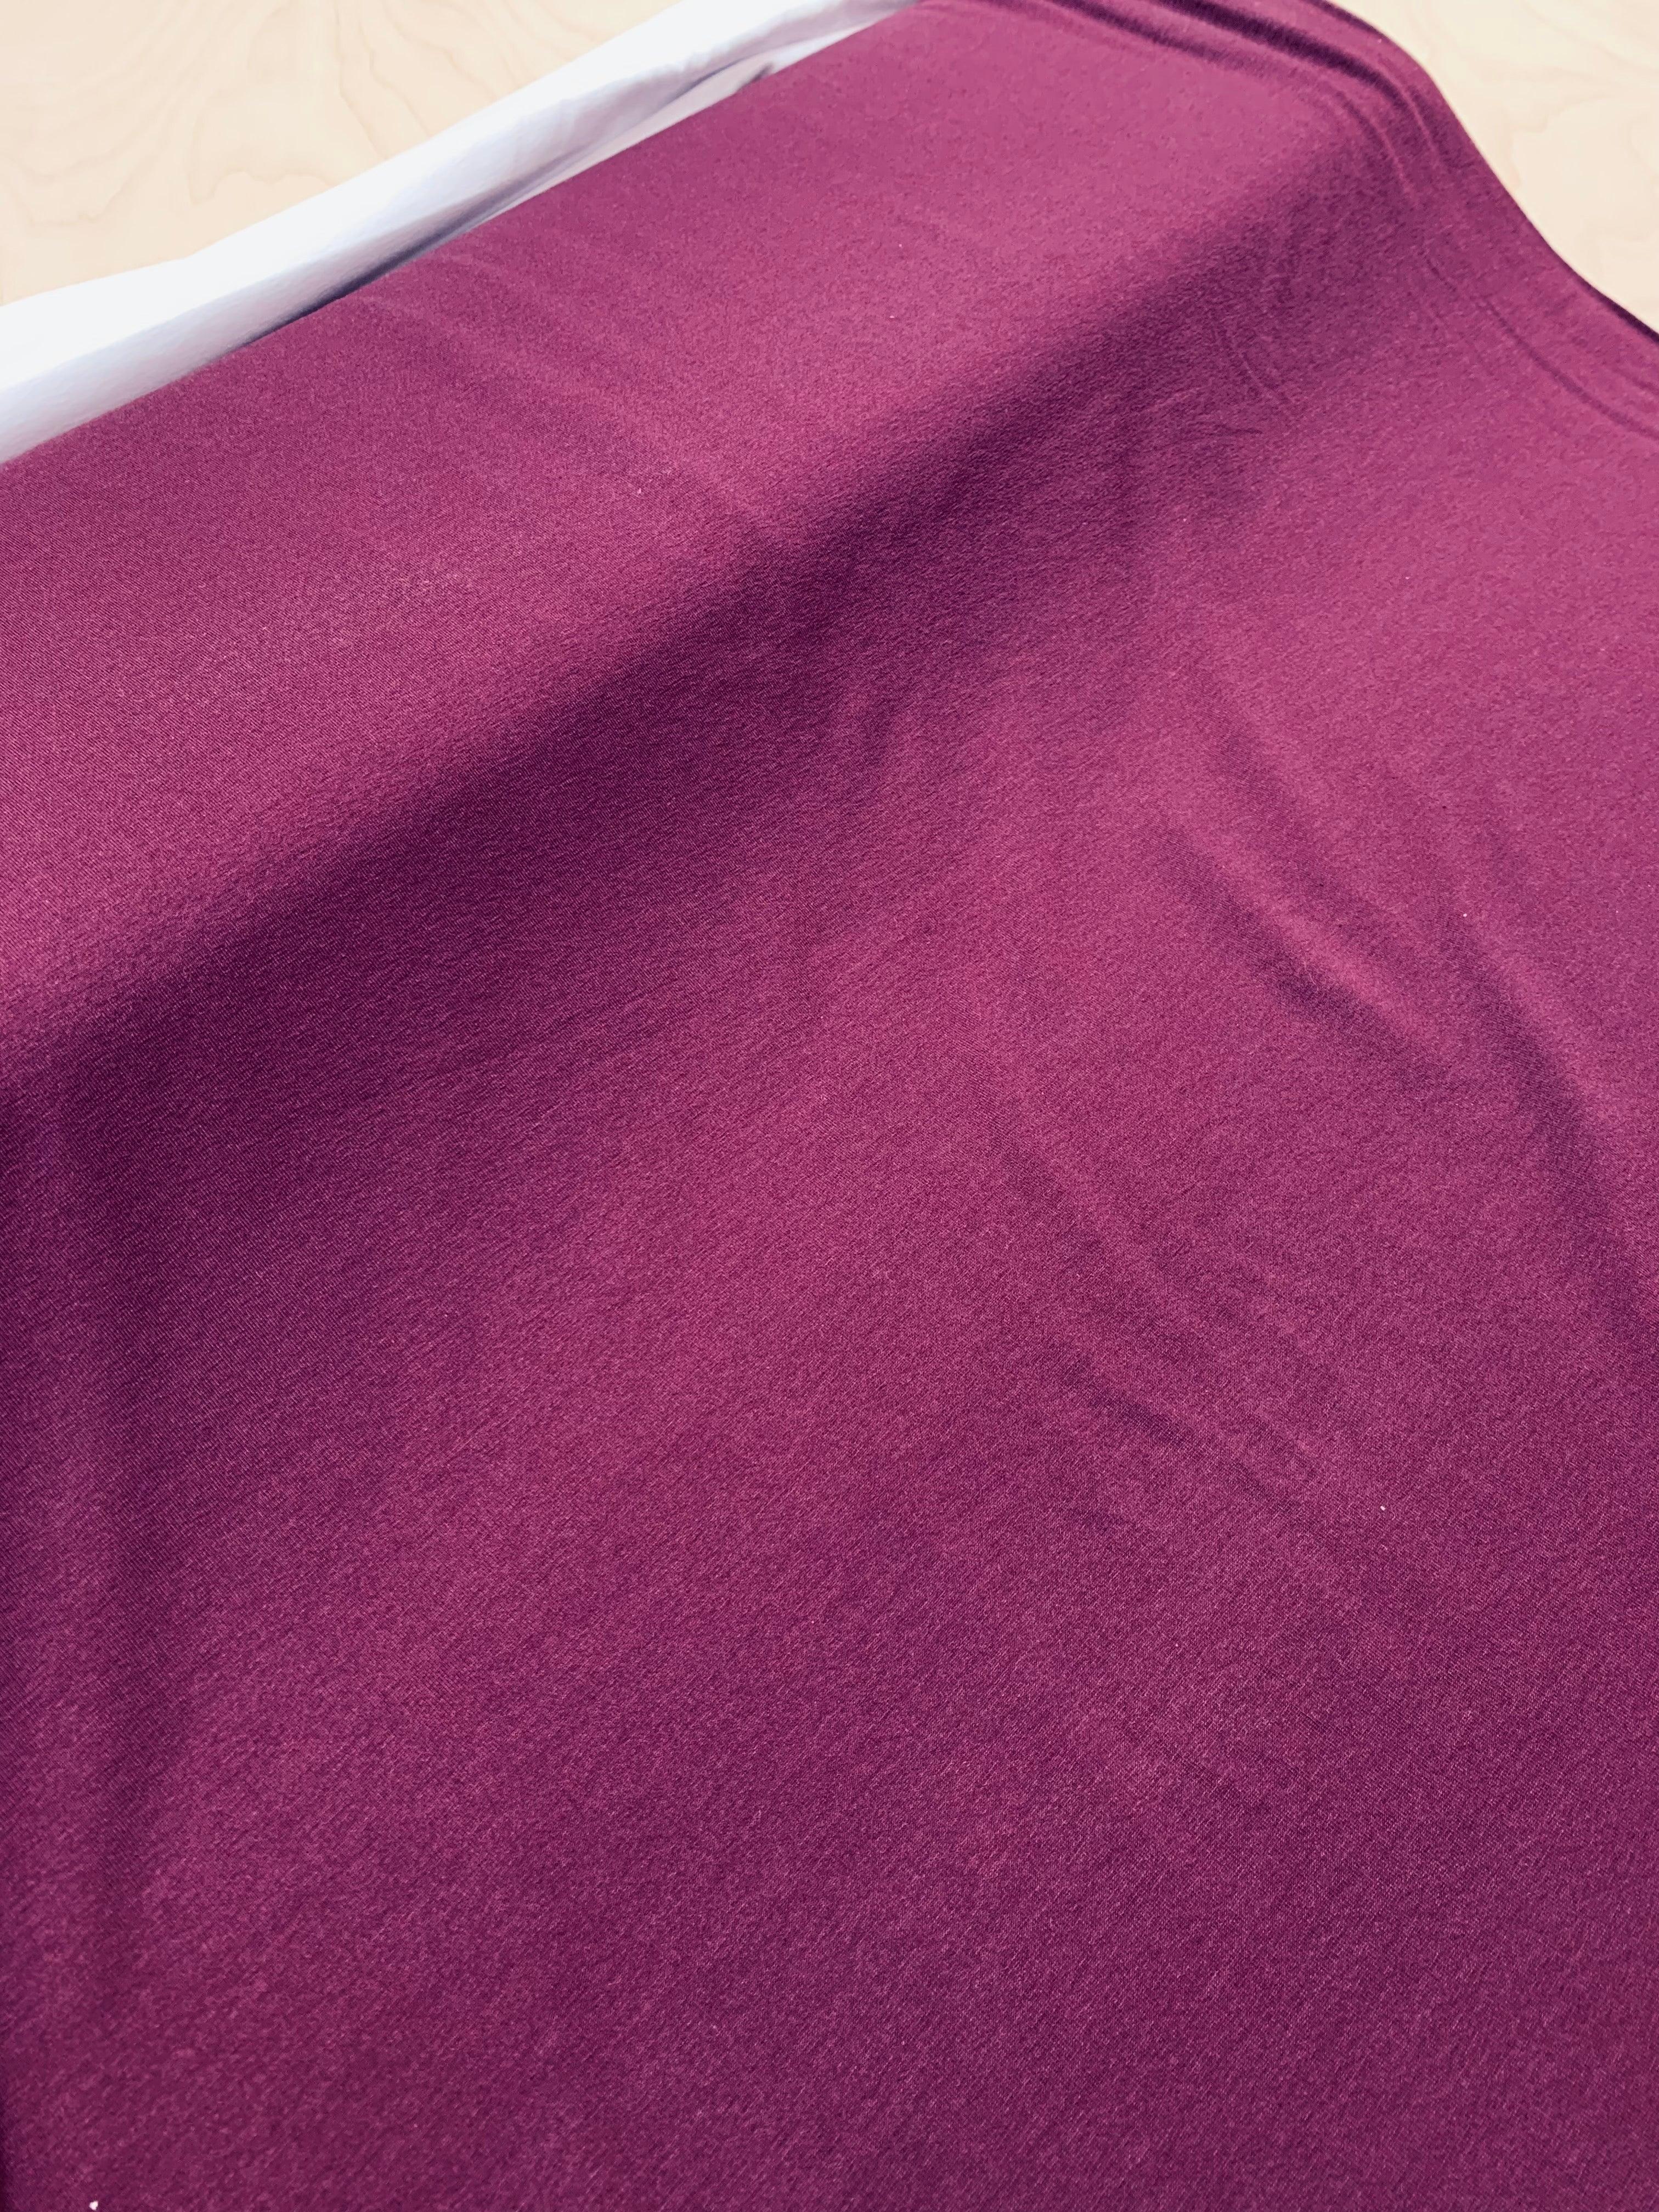 Aubergine Viscose Jersey Fabric